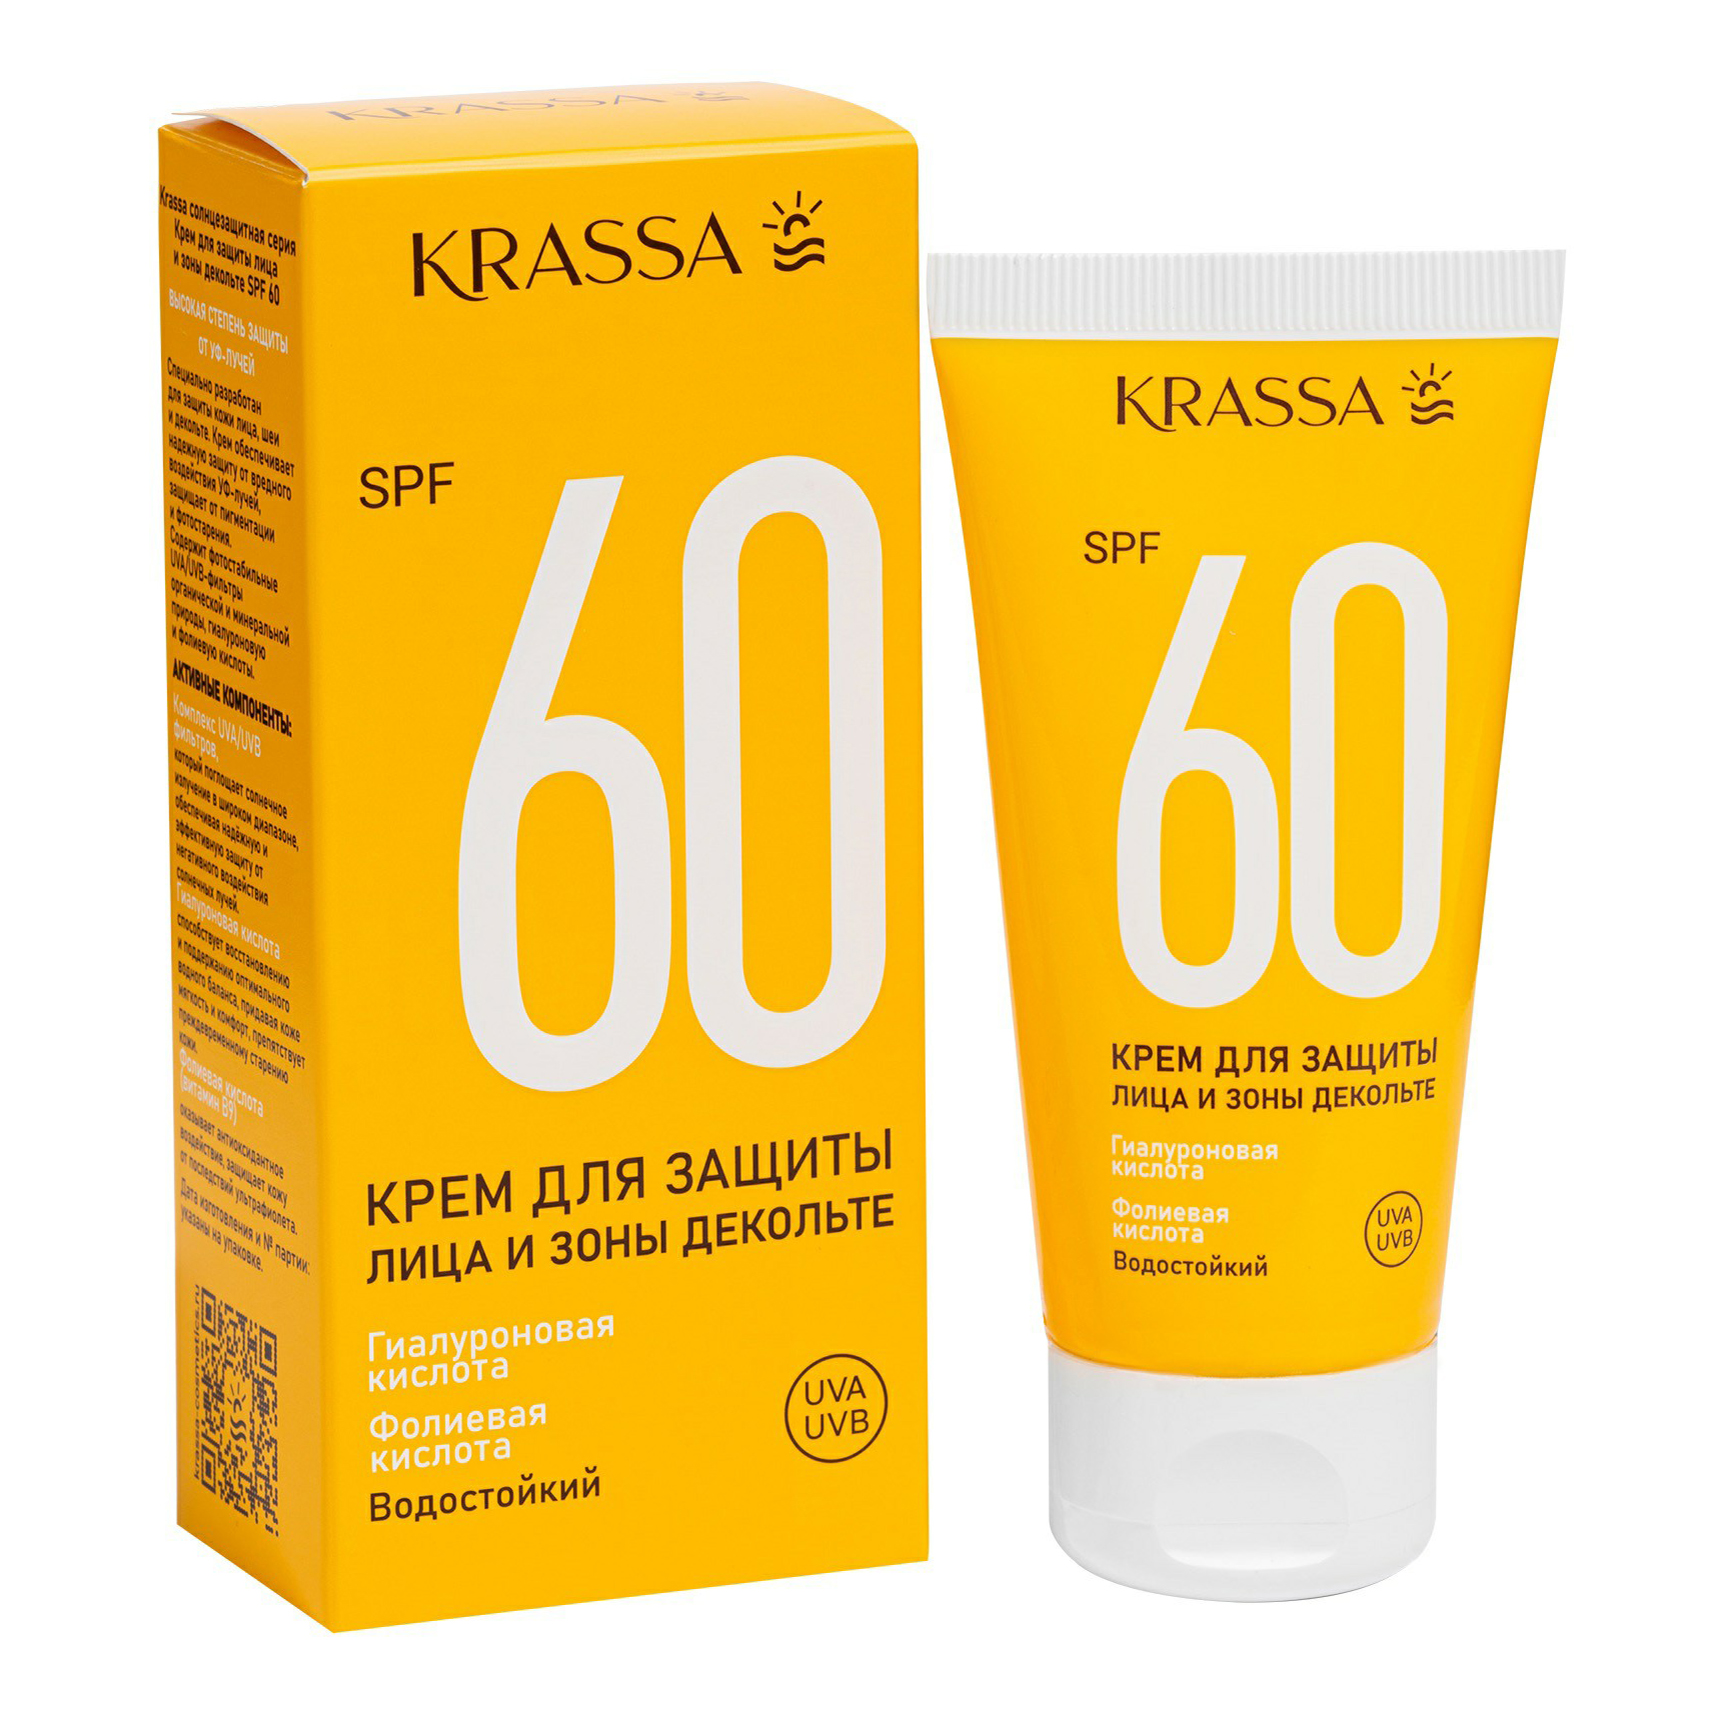 Солнцезащитный Krassa для лица и зоны декольте 60 SPF 50 мл спрей для защиты от солнца sun expert by krassa spf 60 180 мл